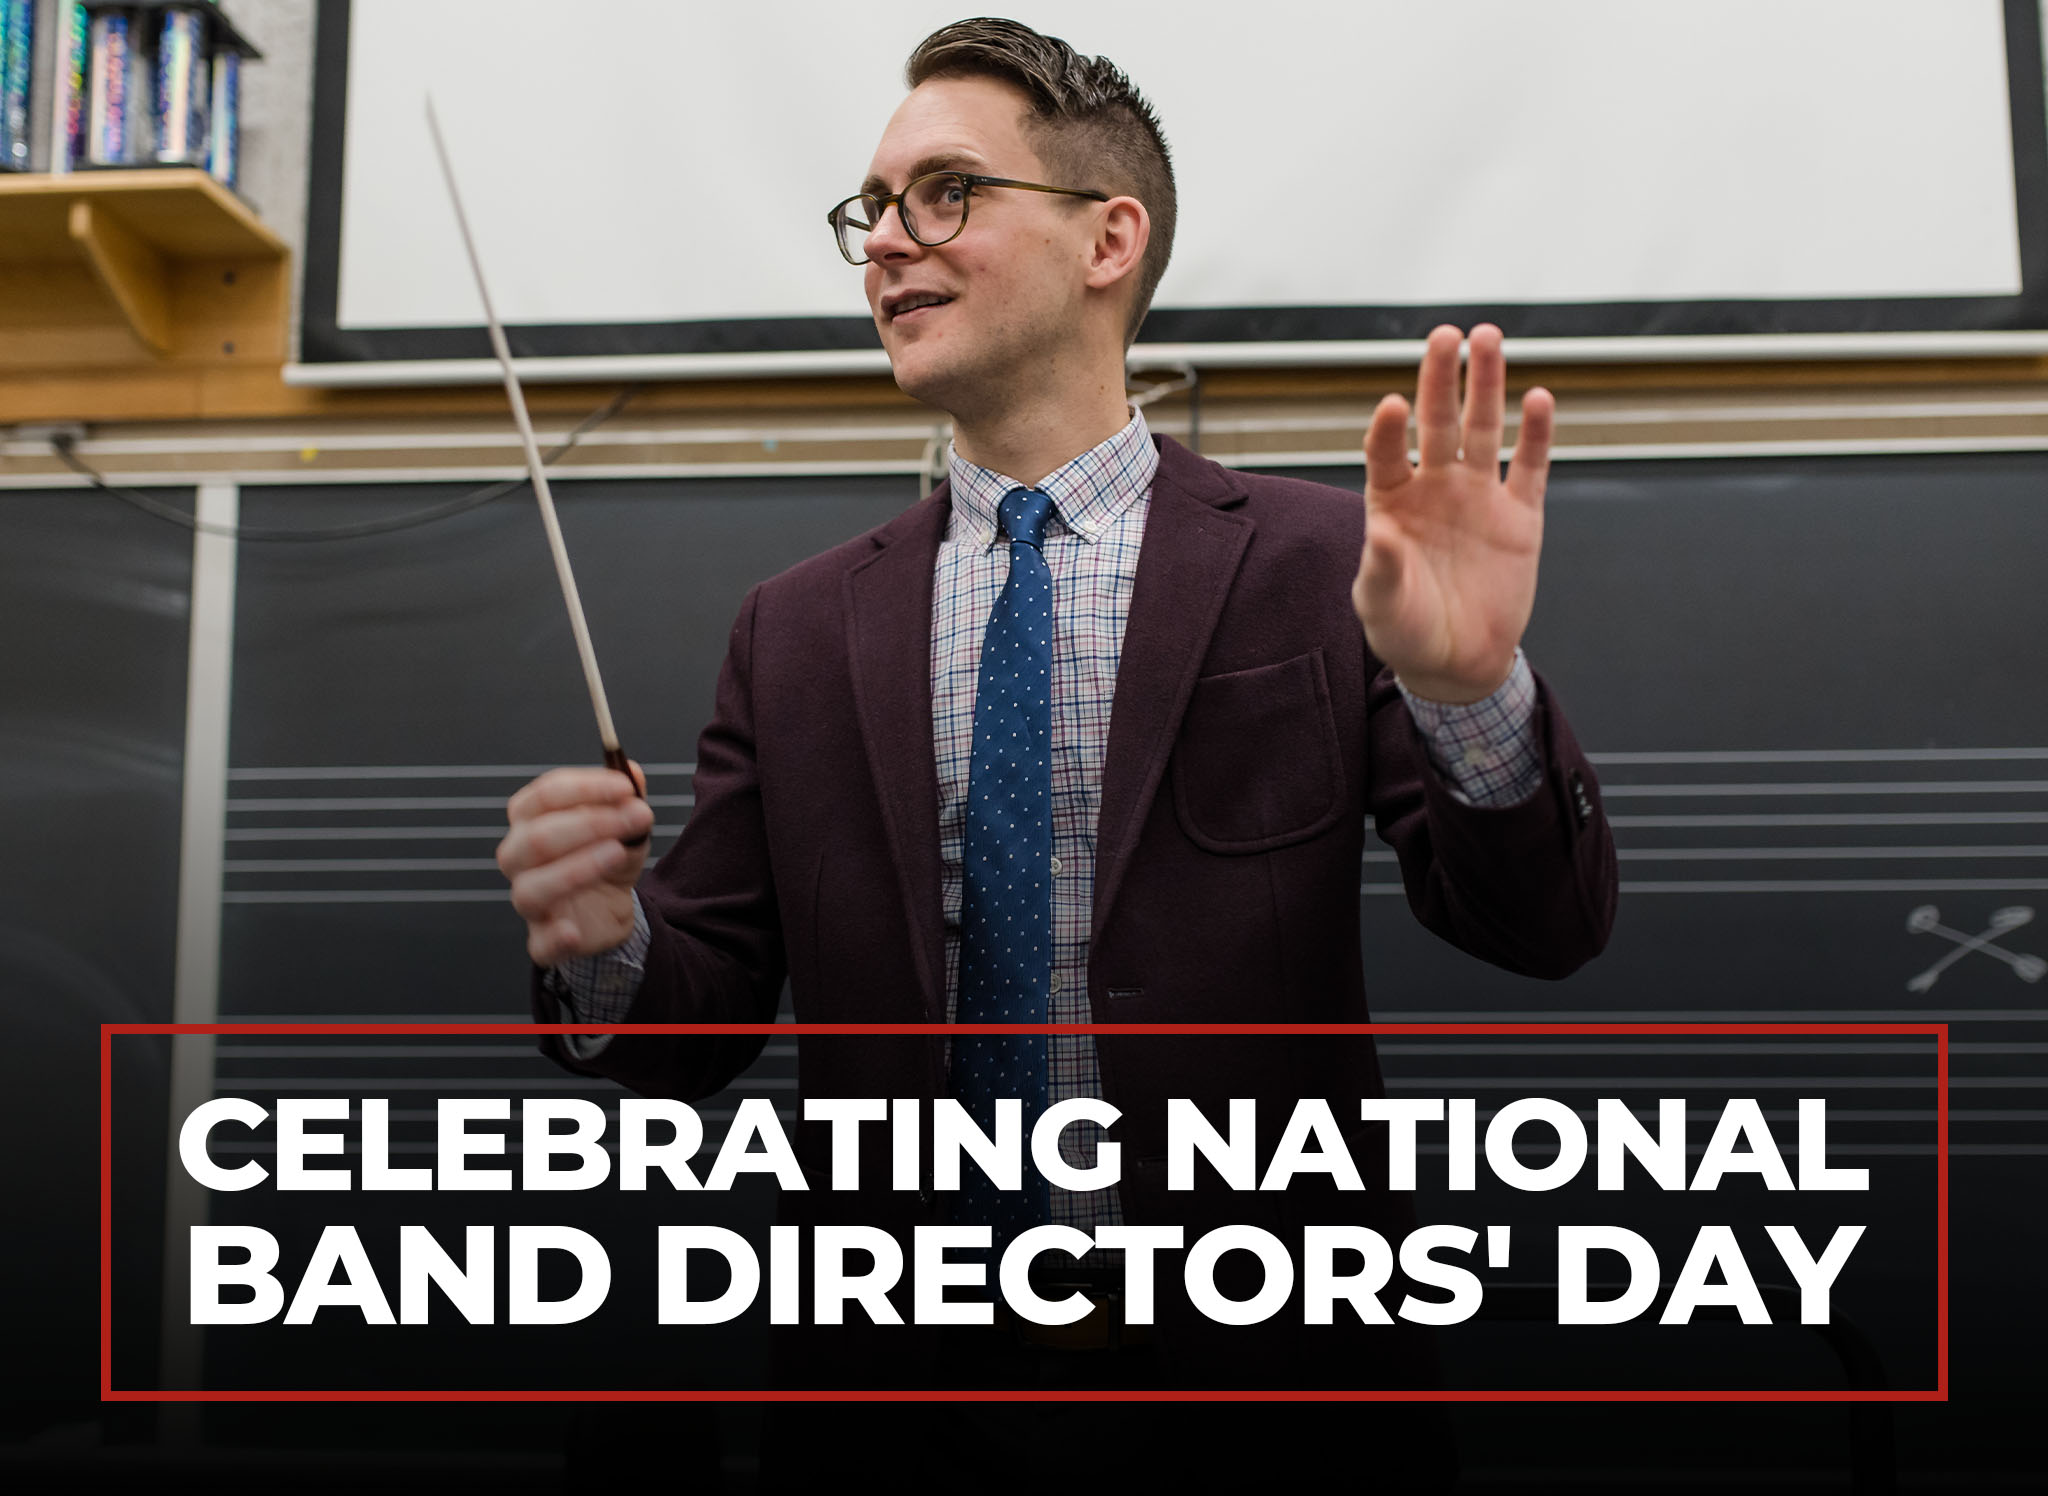 National Band Directors' Day